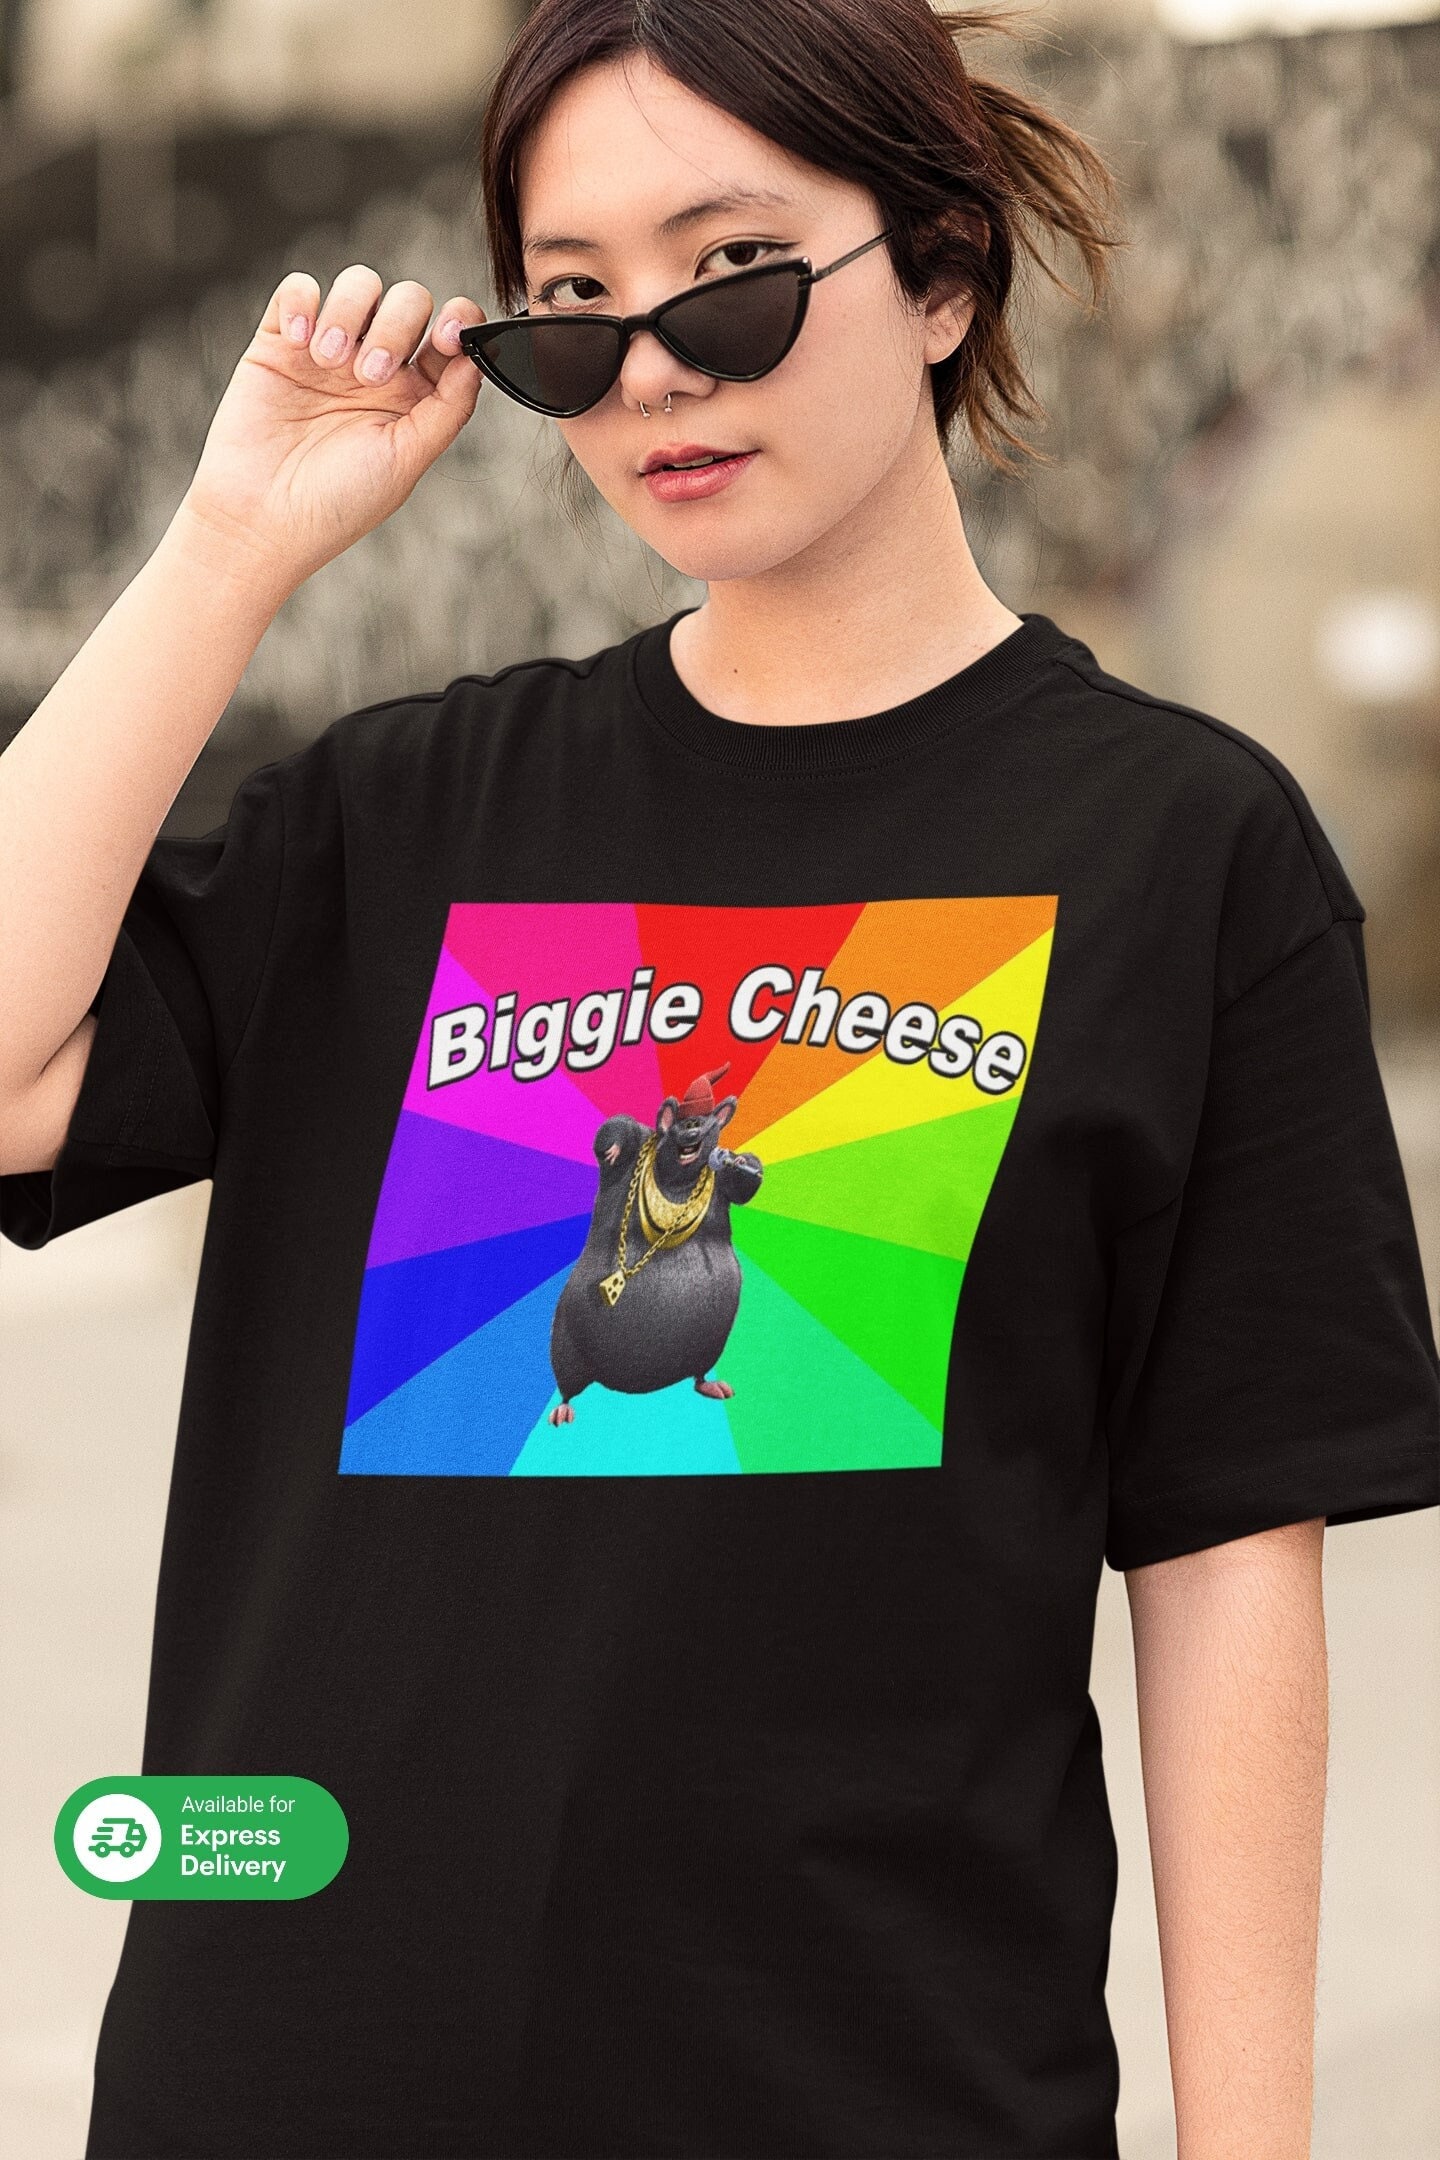 BIGGIE CHEESE : r/memes